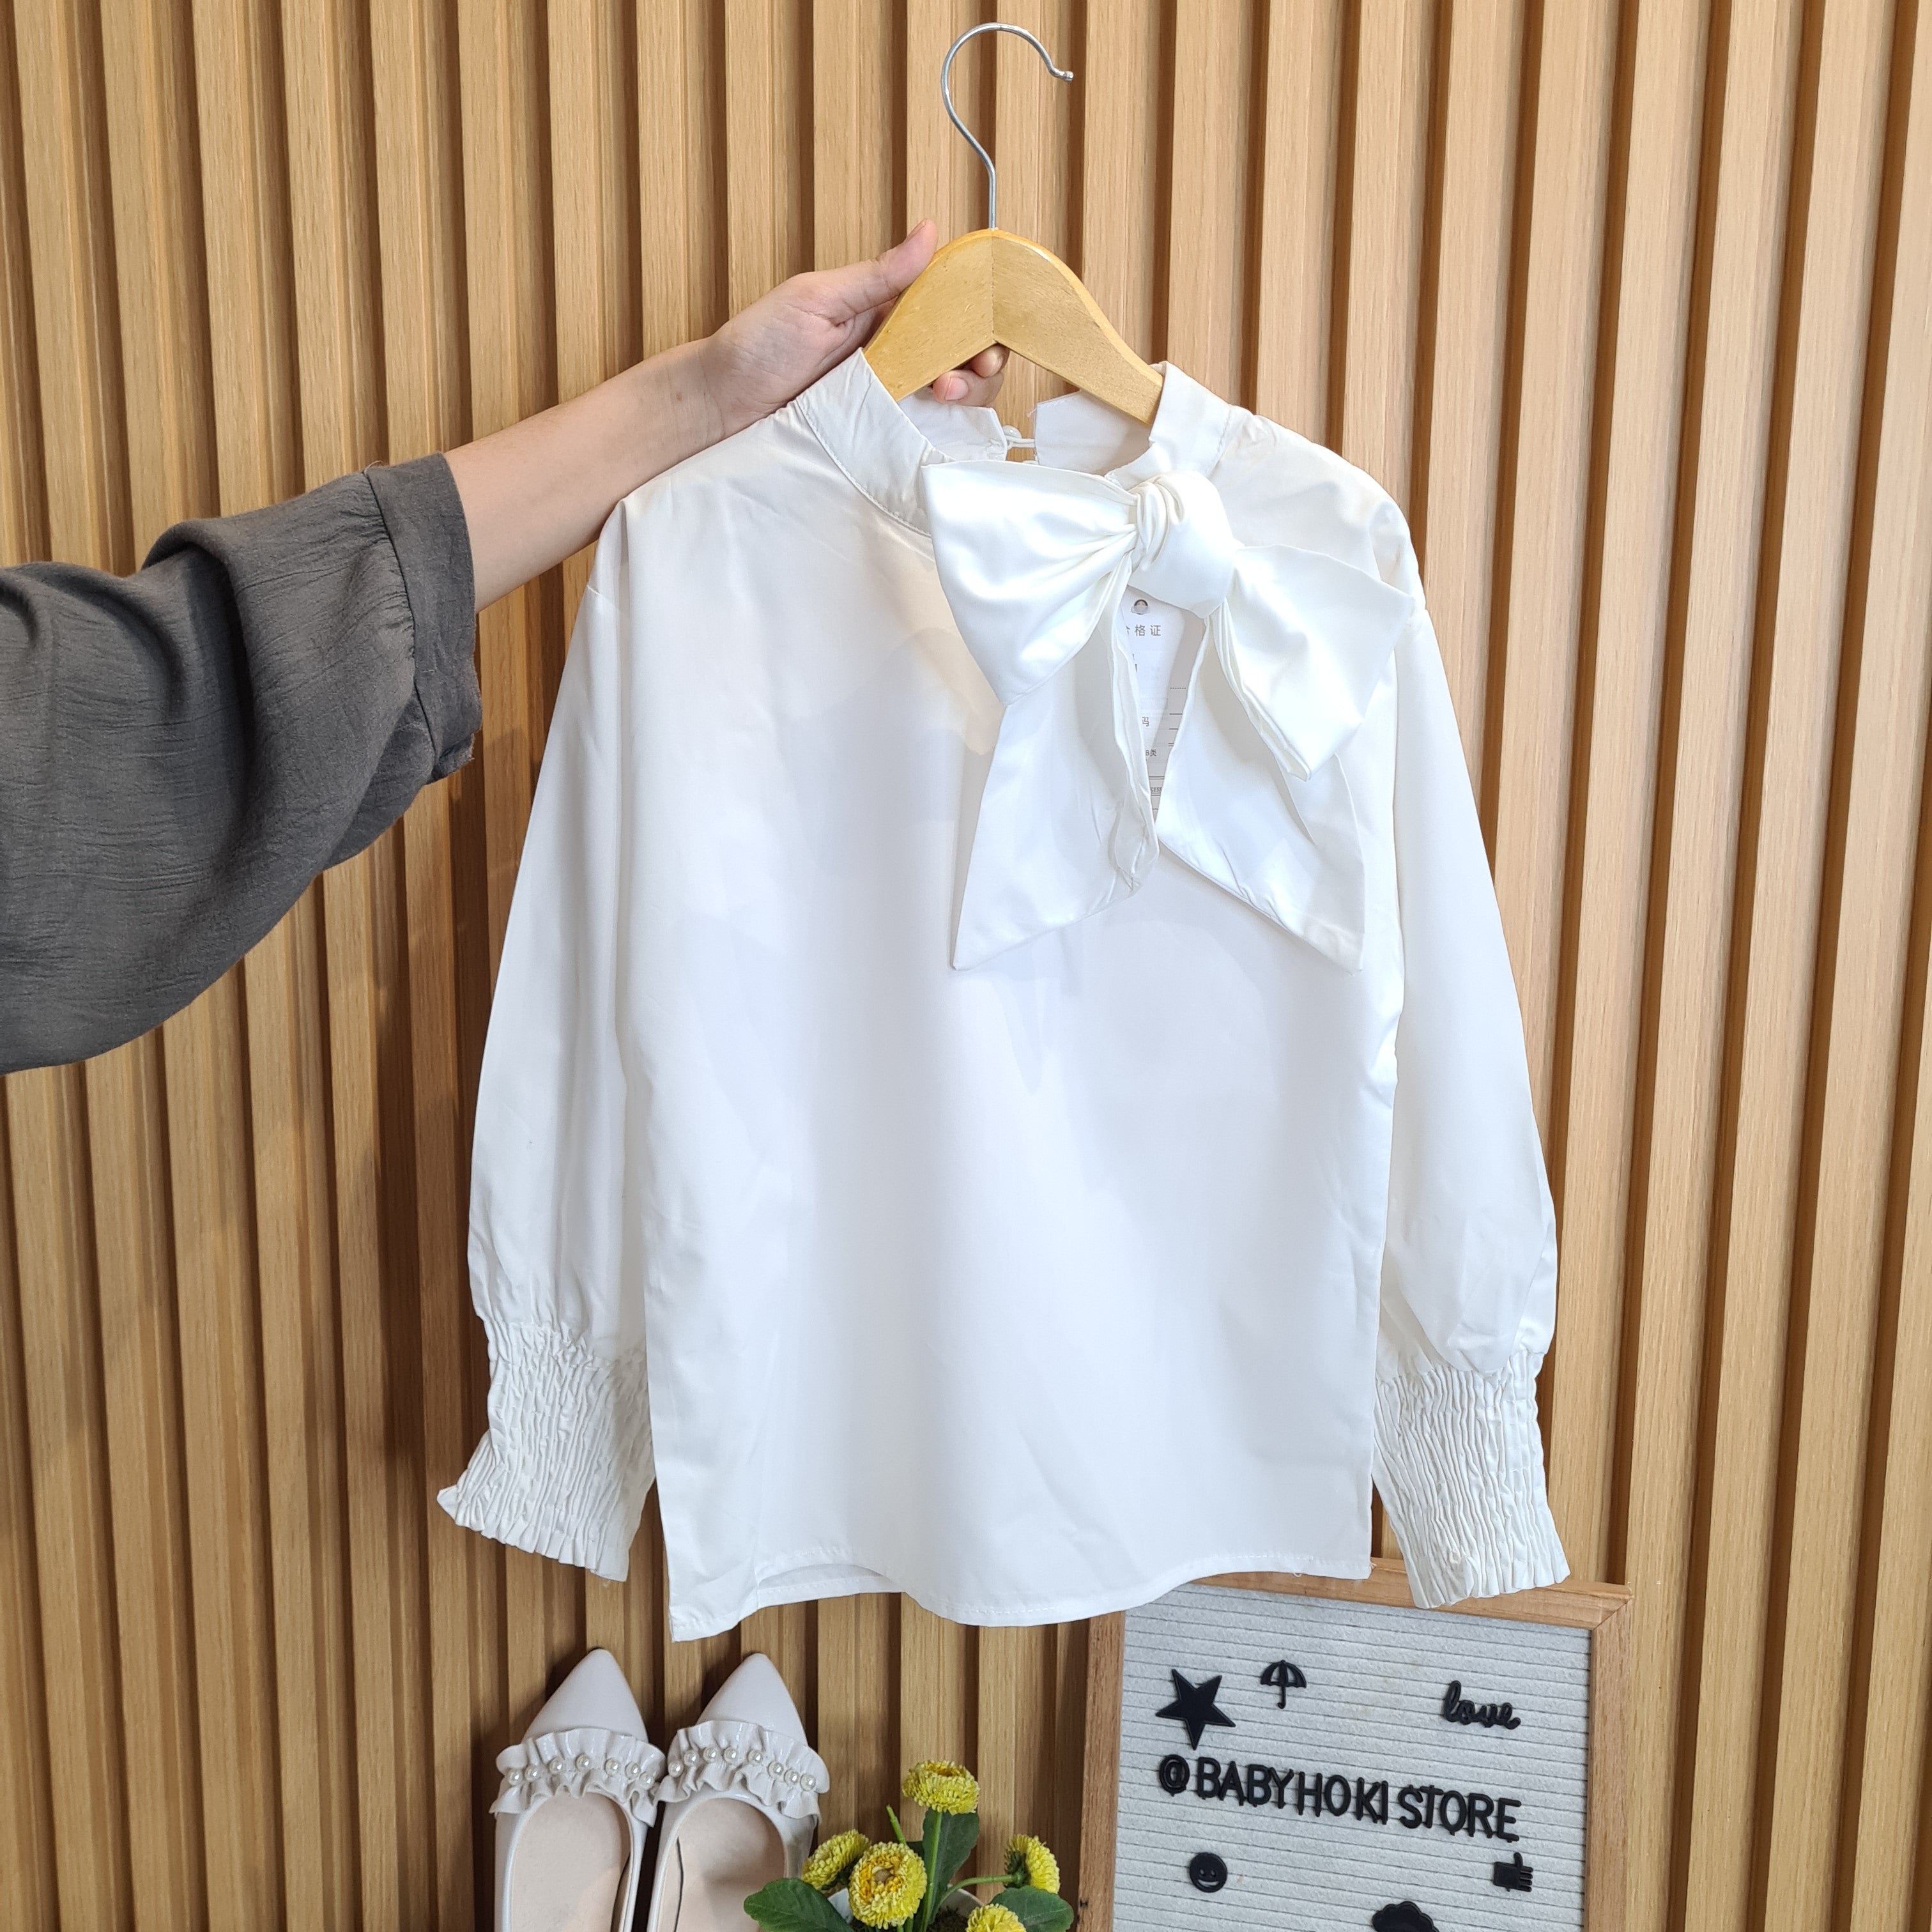 [507747] - Baju Atasan Blouse Polos Fashion Import Anak Perempuan - Motif Rubber Sleeve